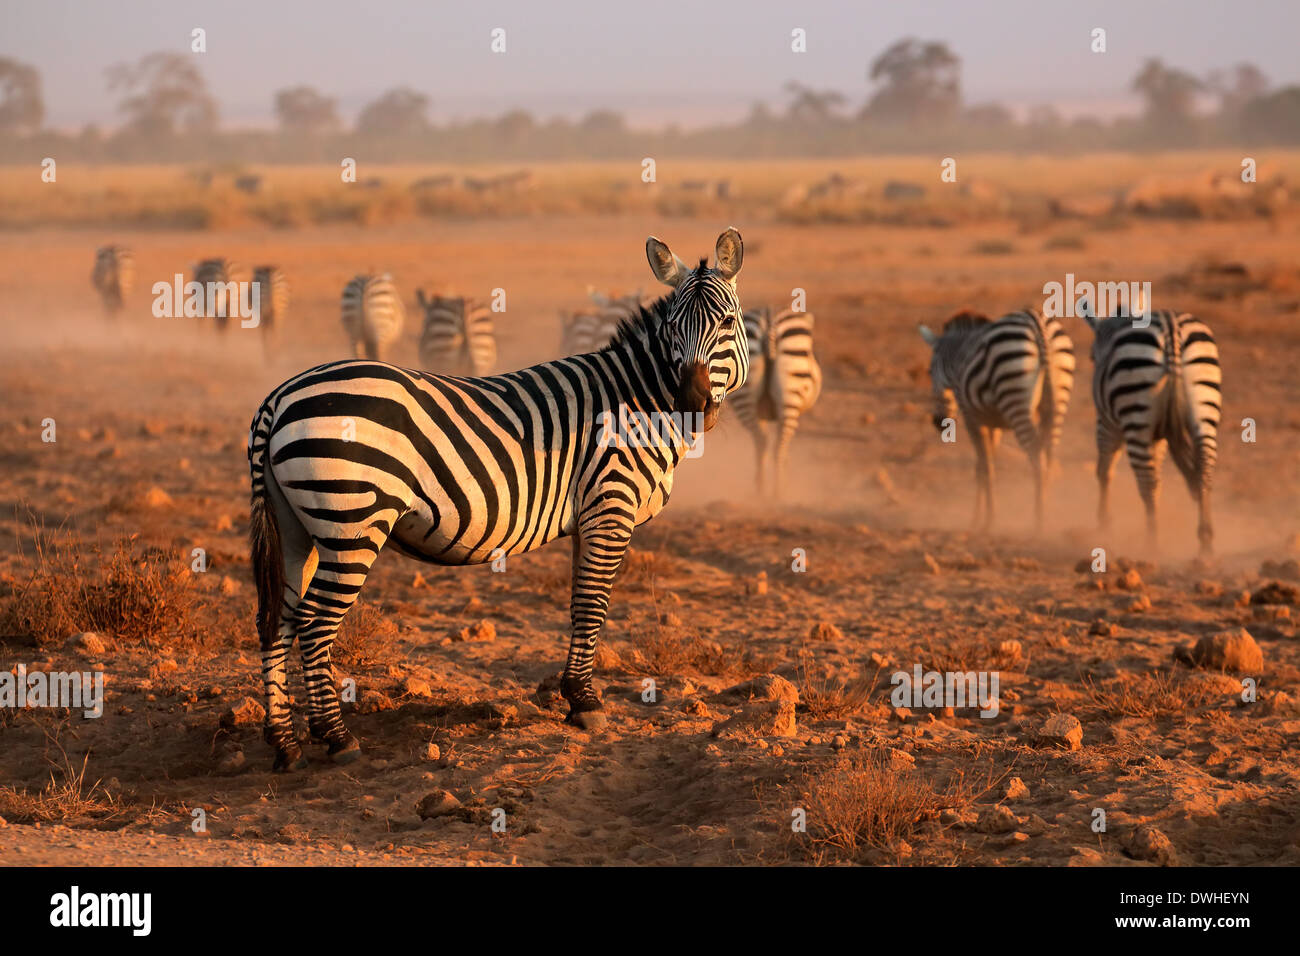 Plains zebras (Equus burchelli) in early morning dust, Amboseli National Park, Kenya Stock Photo